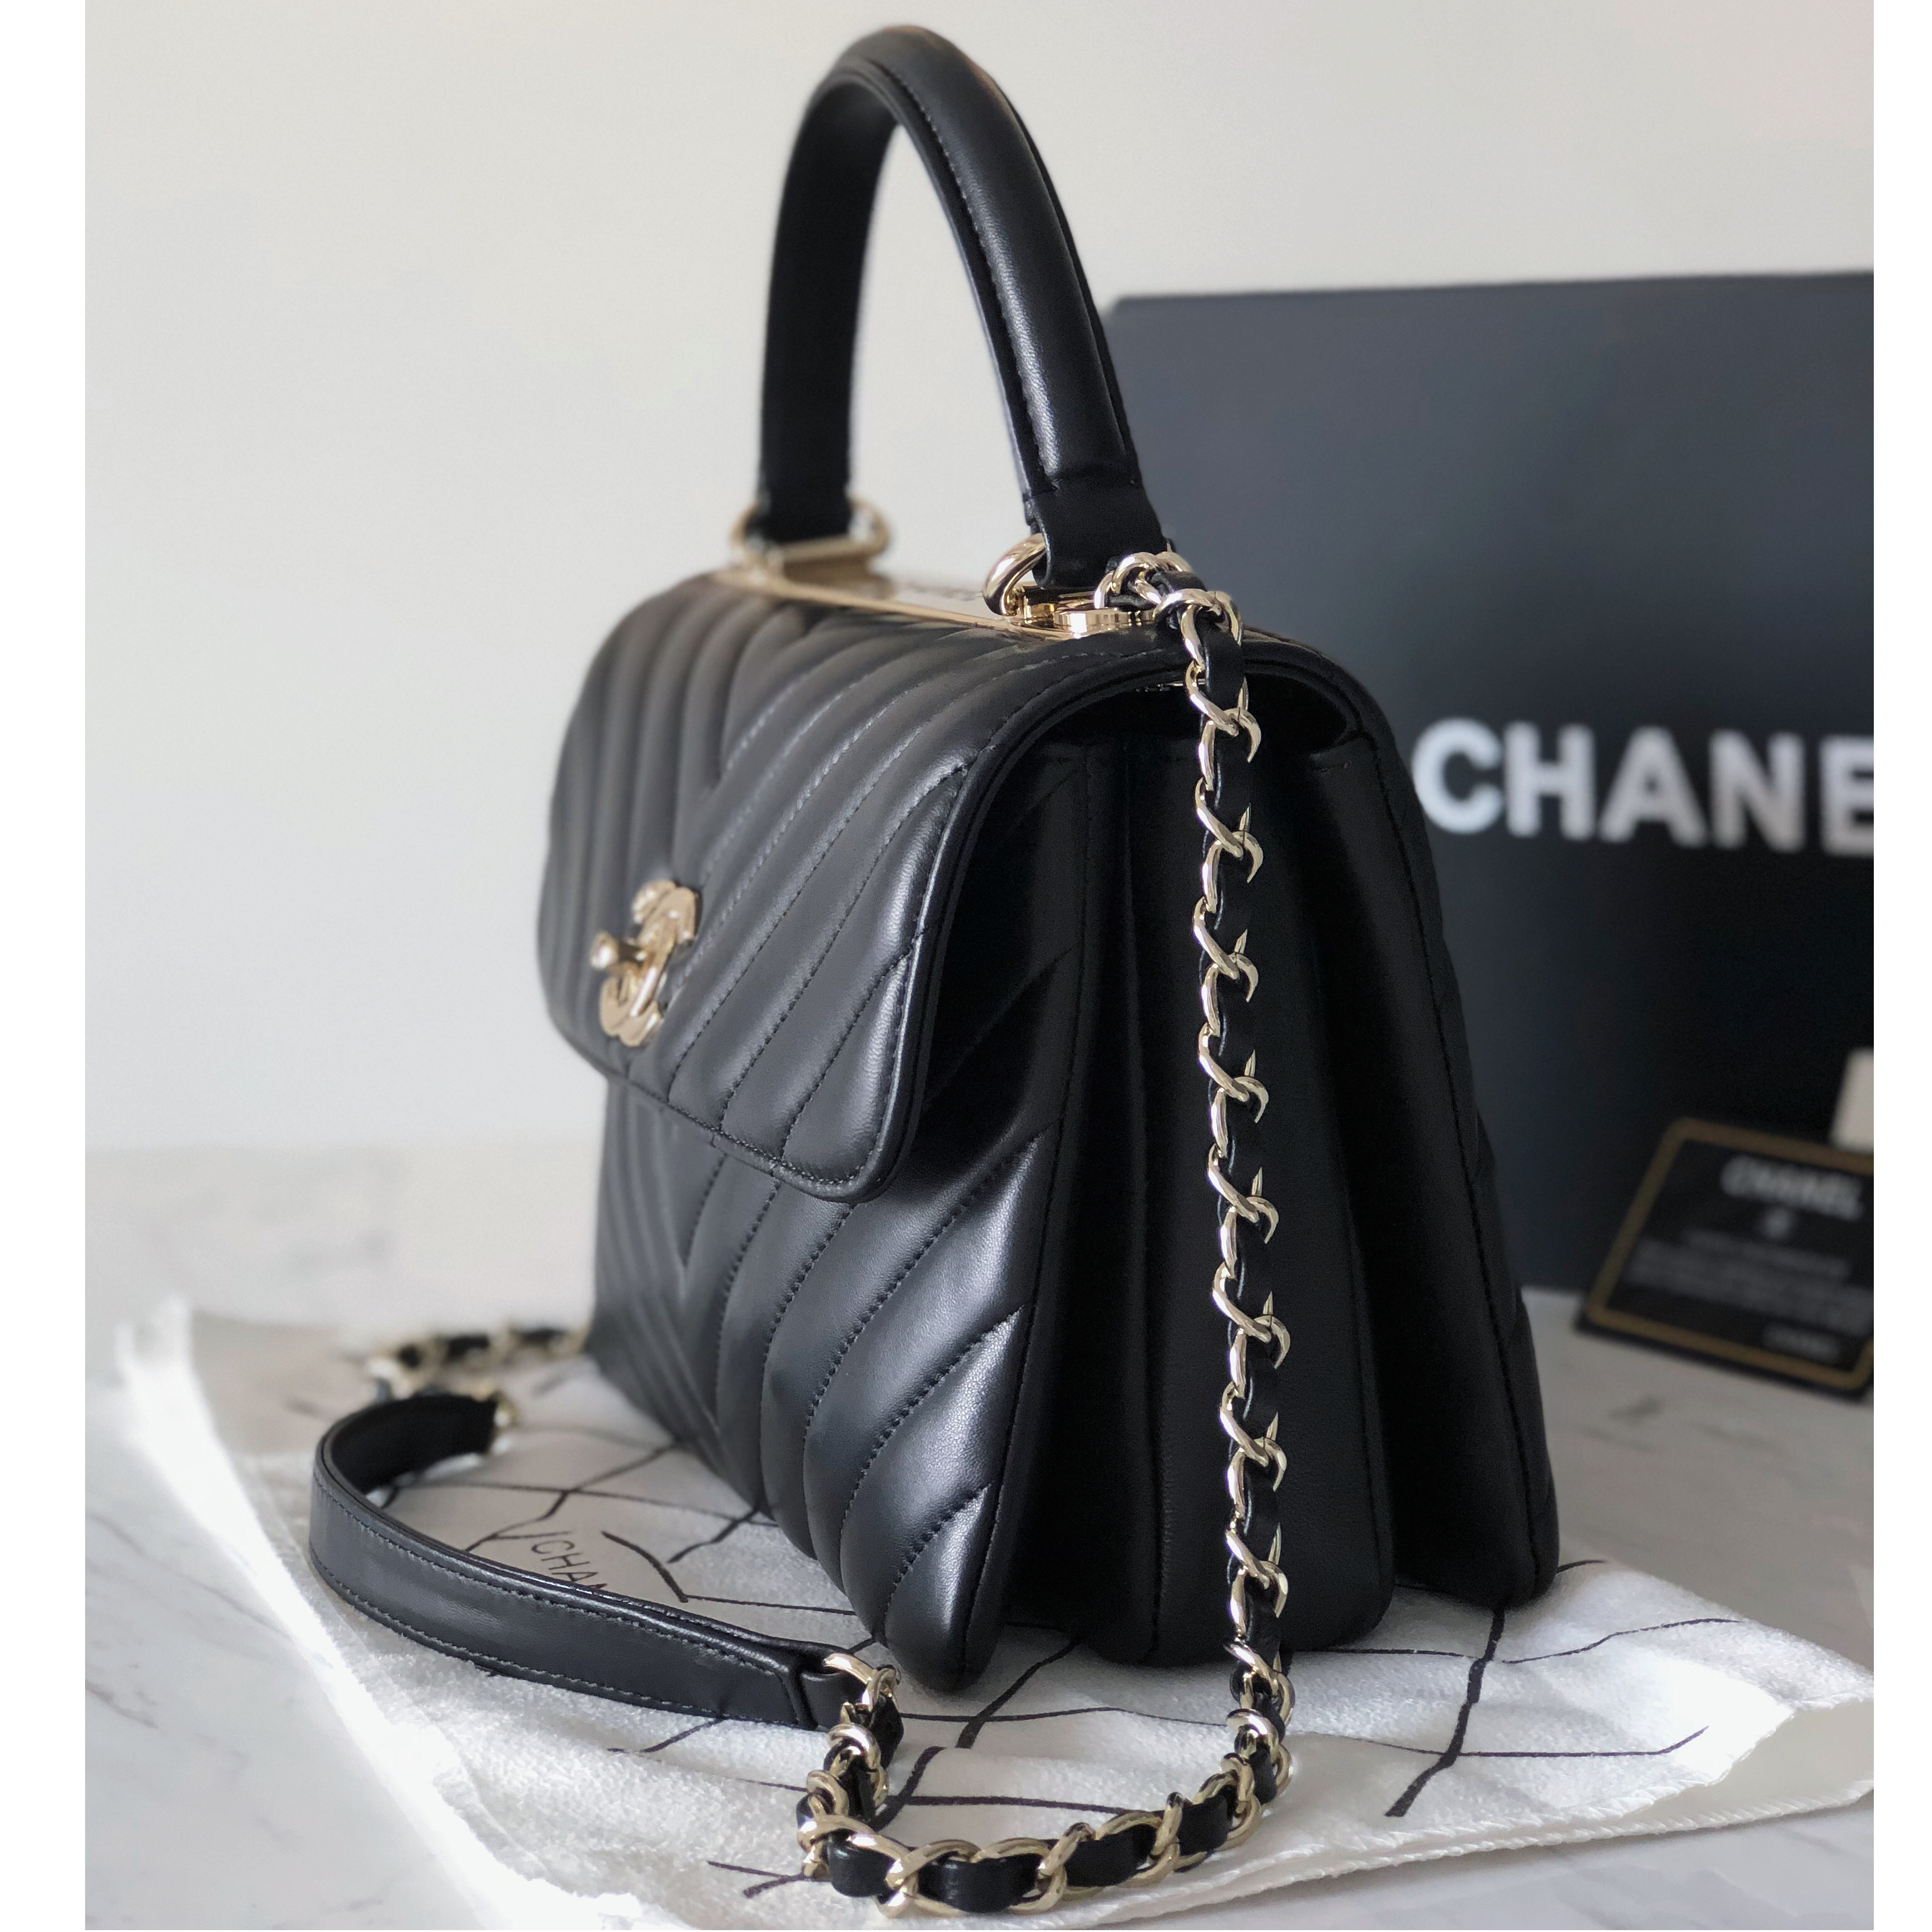 Coco chanel flap bag with top handle chevron purse small designer cross body handbags tote black ...